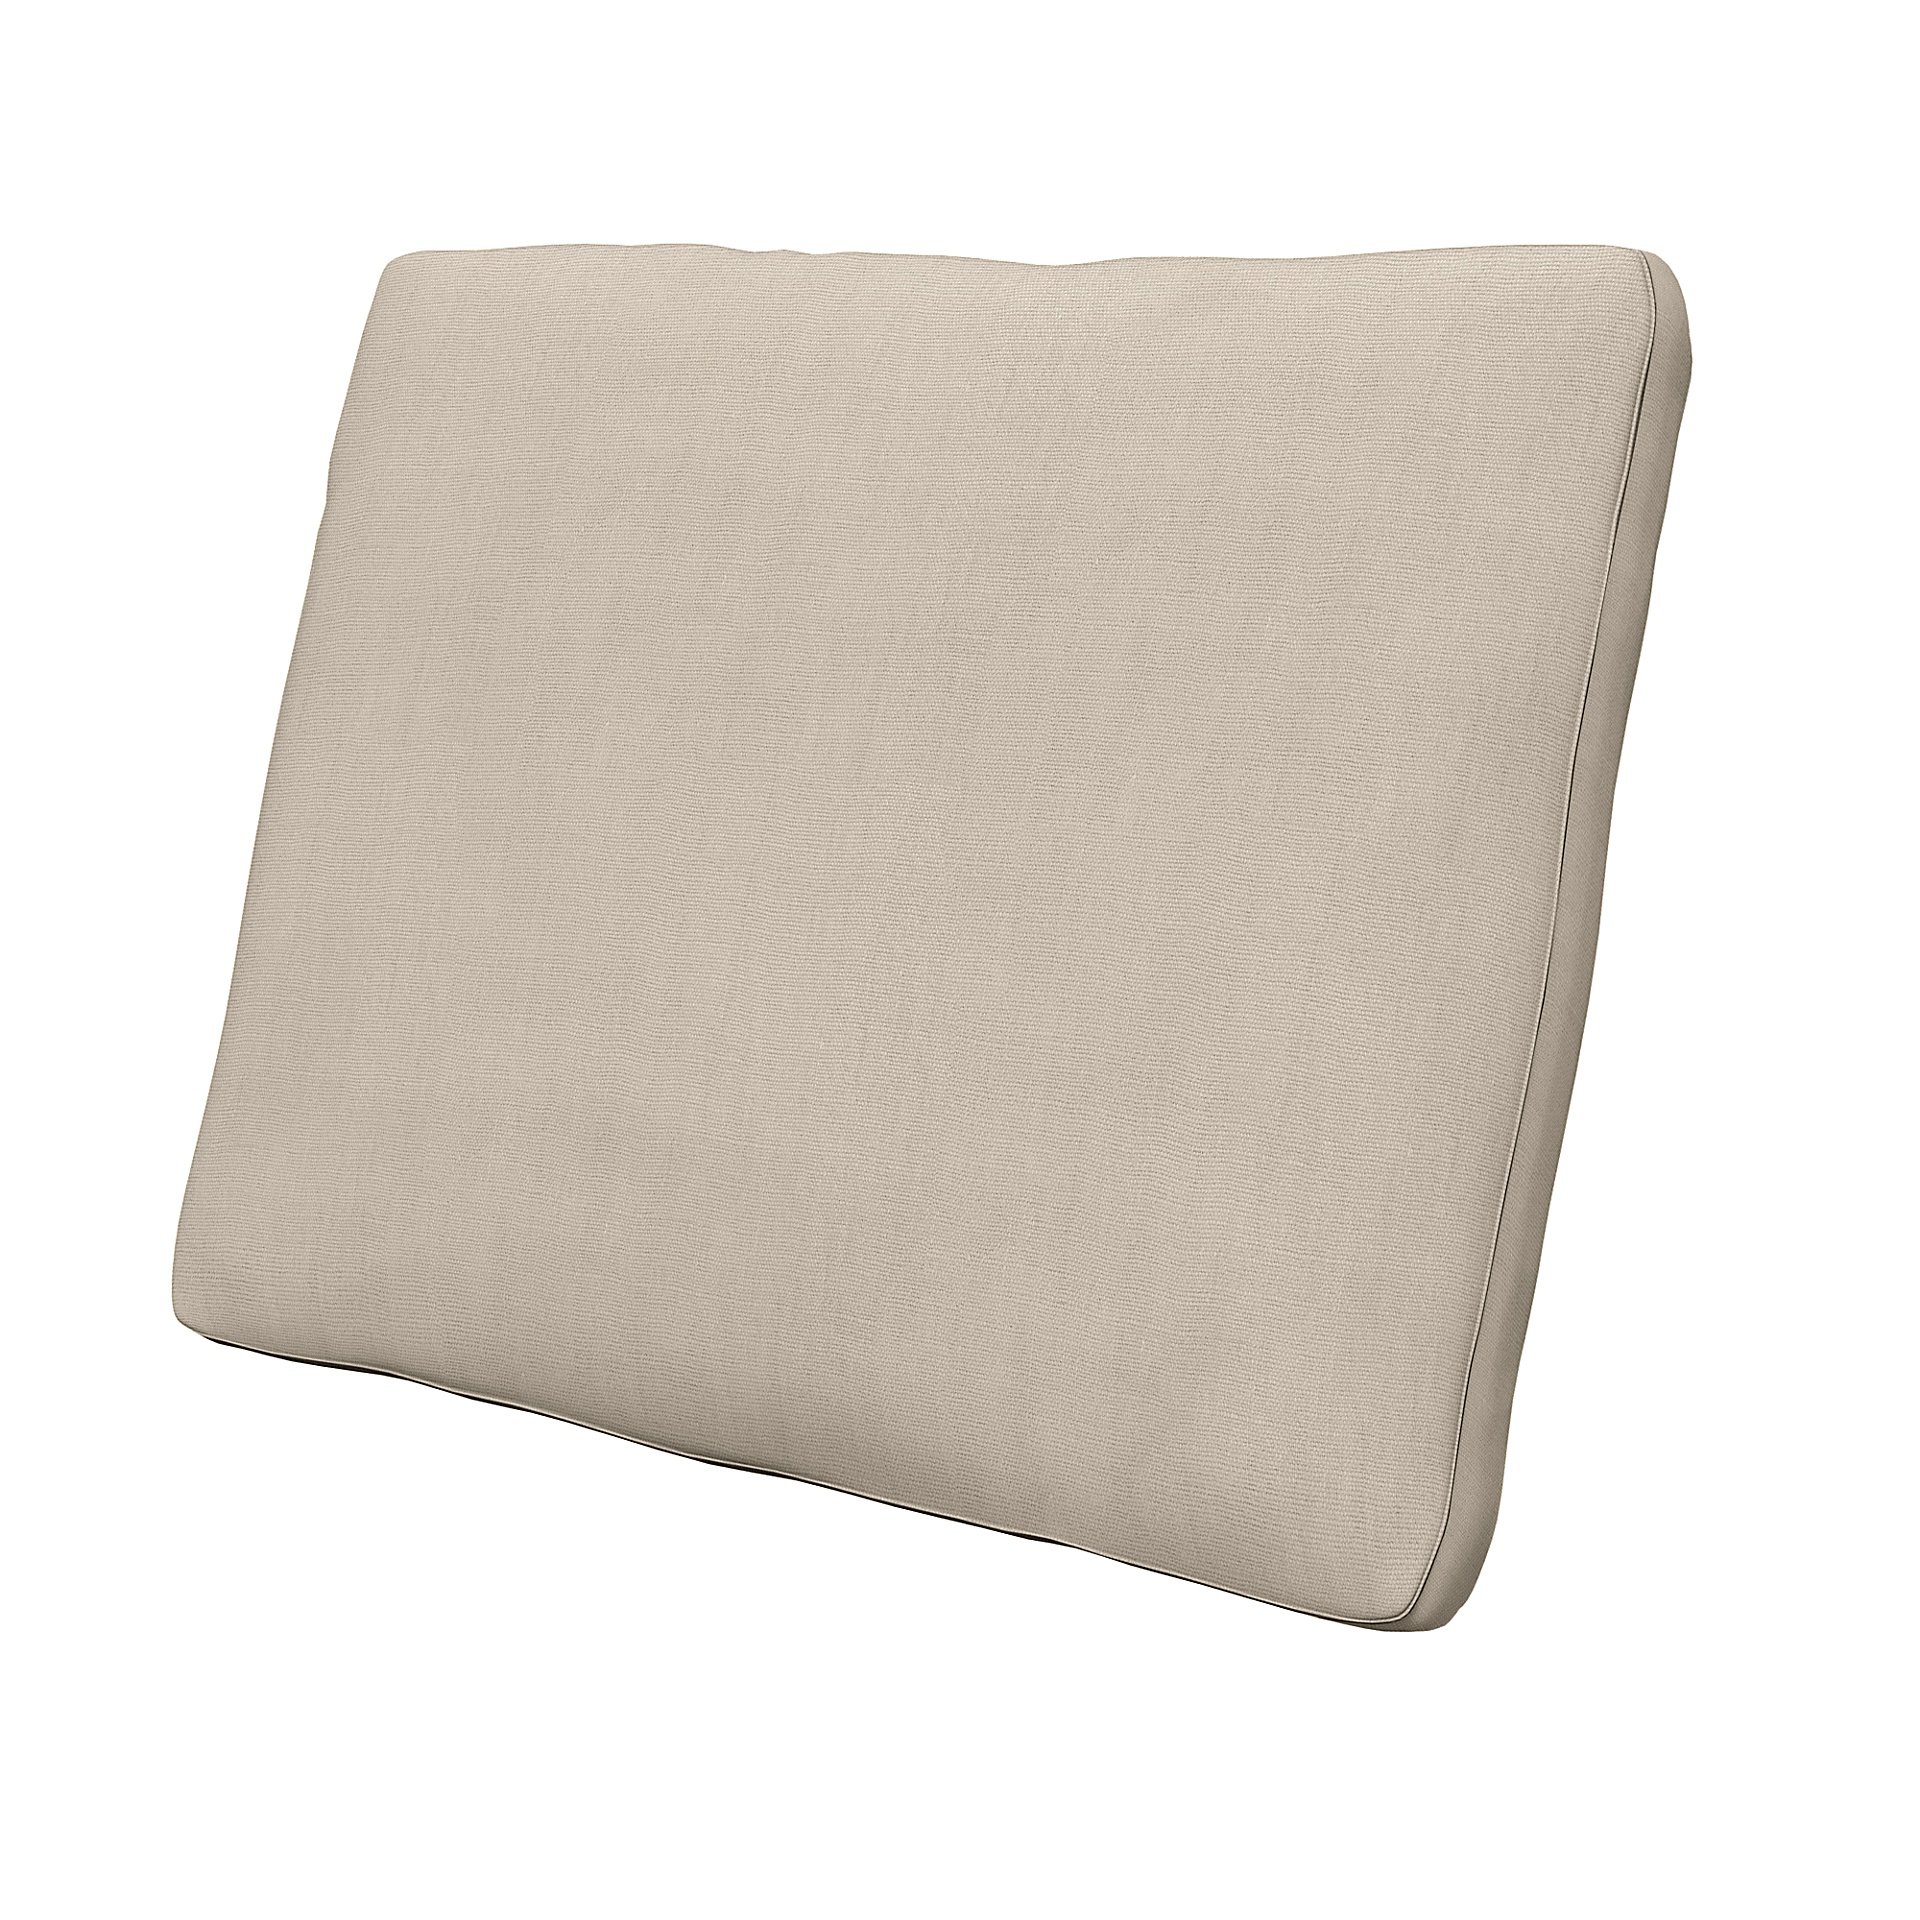 IKEA - Cushion Cover Karlstad 58x48x5 cm, Parchment, Linen - Bemz